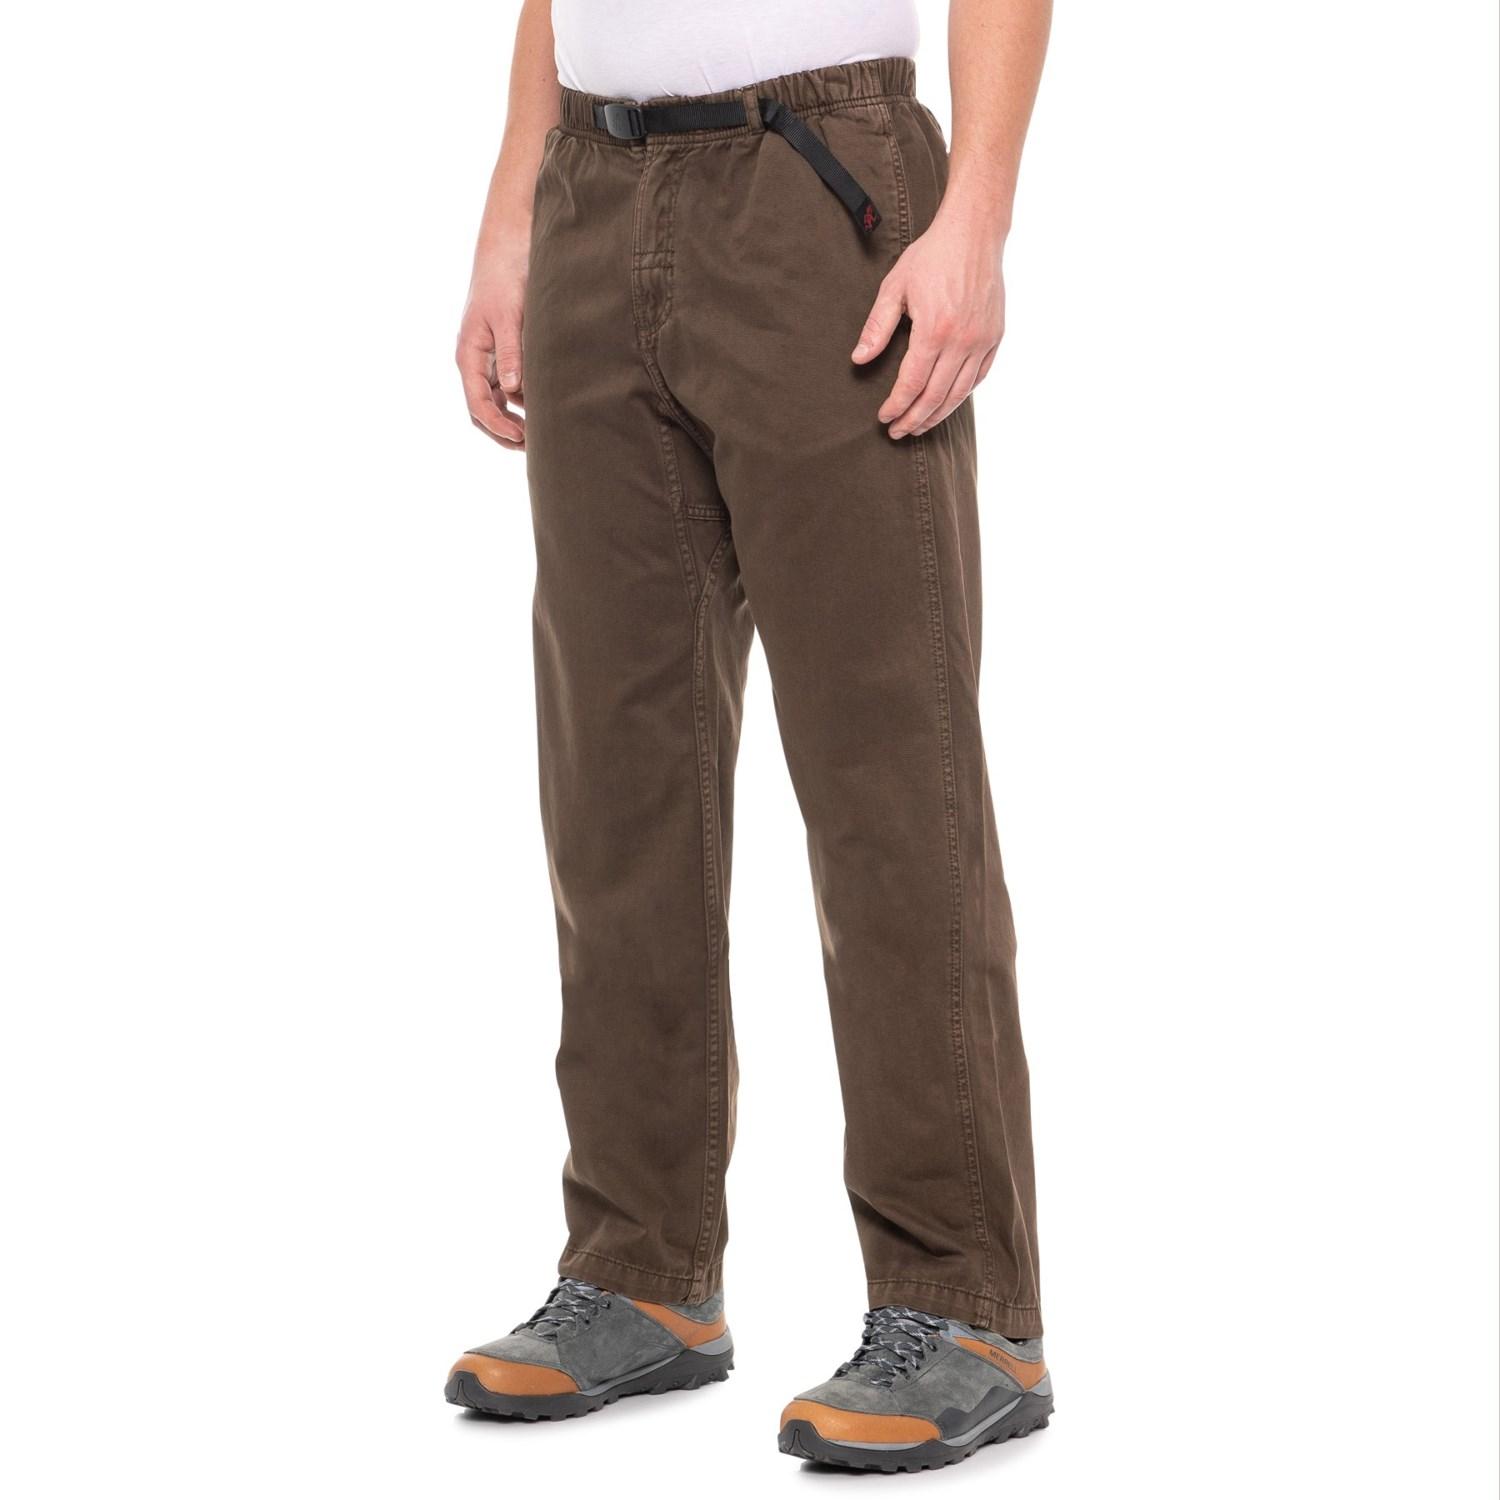 Gramicci Cotton Rockin? Sport Pants in Brown for Men - Lyst